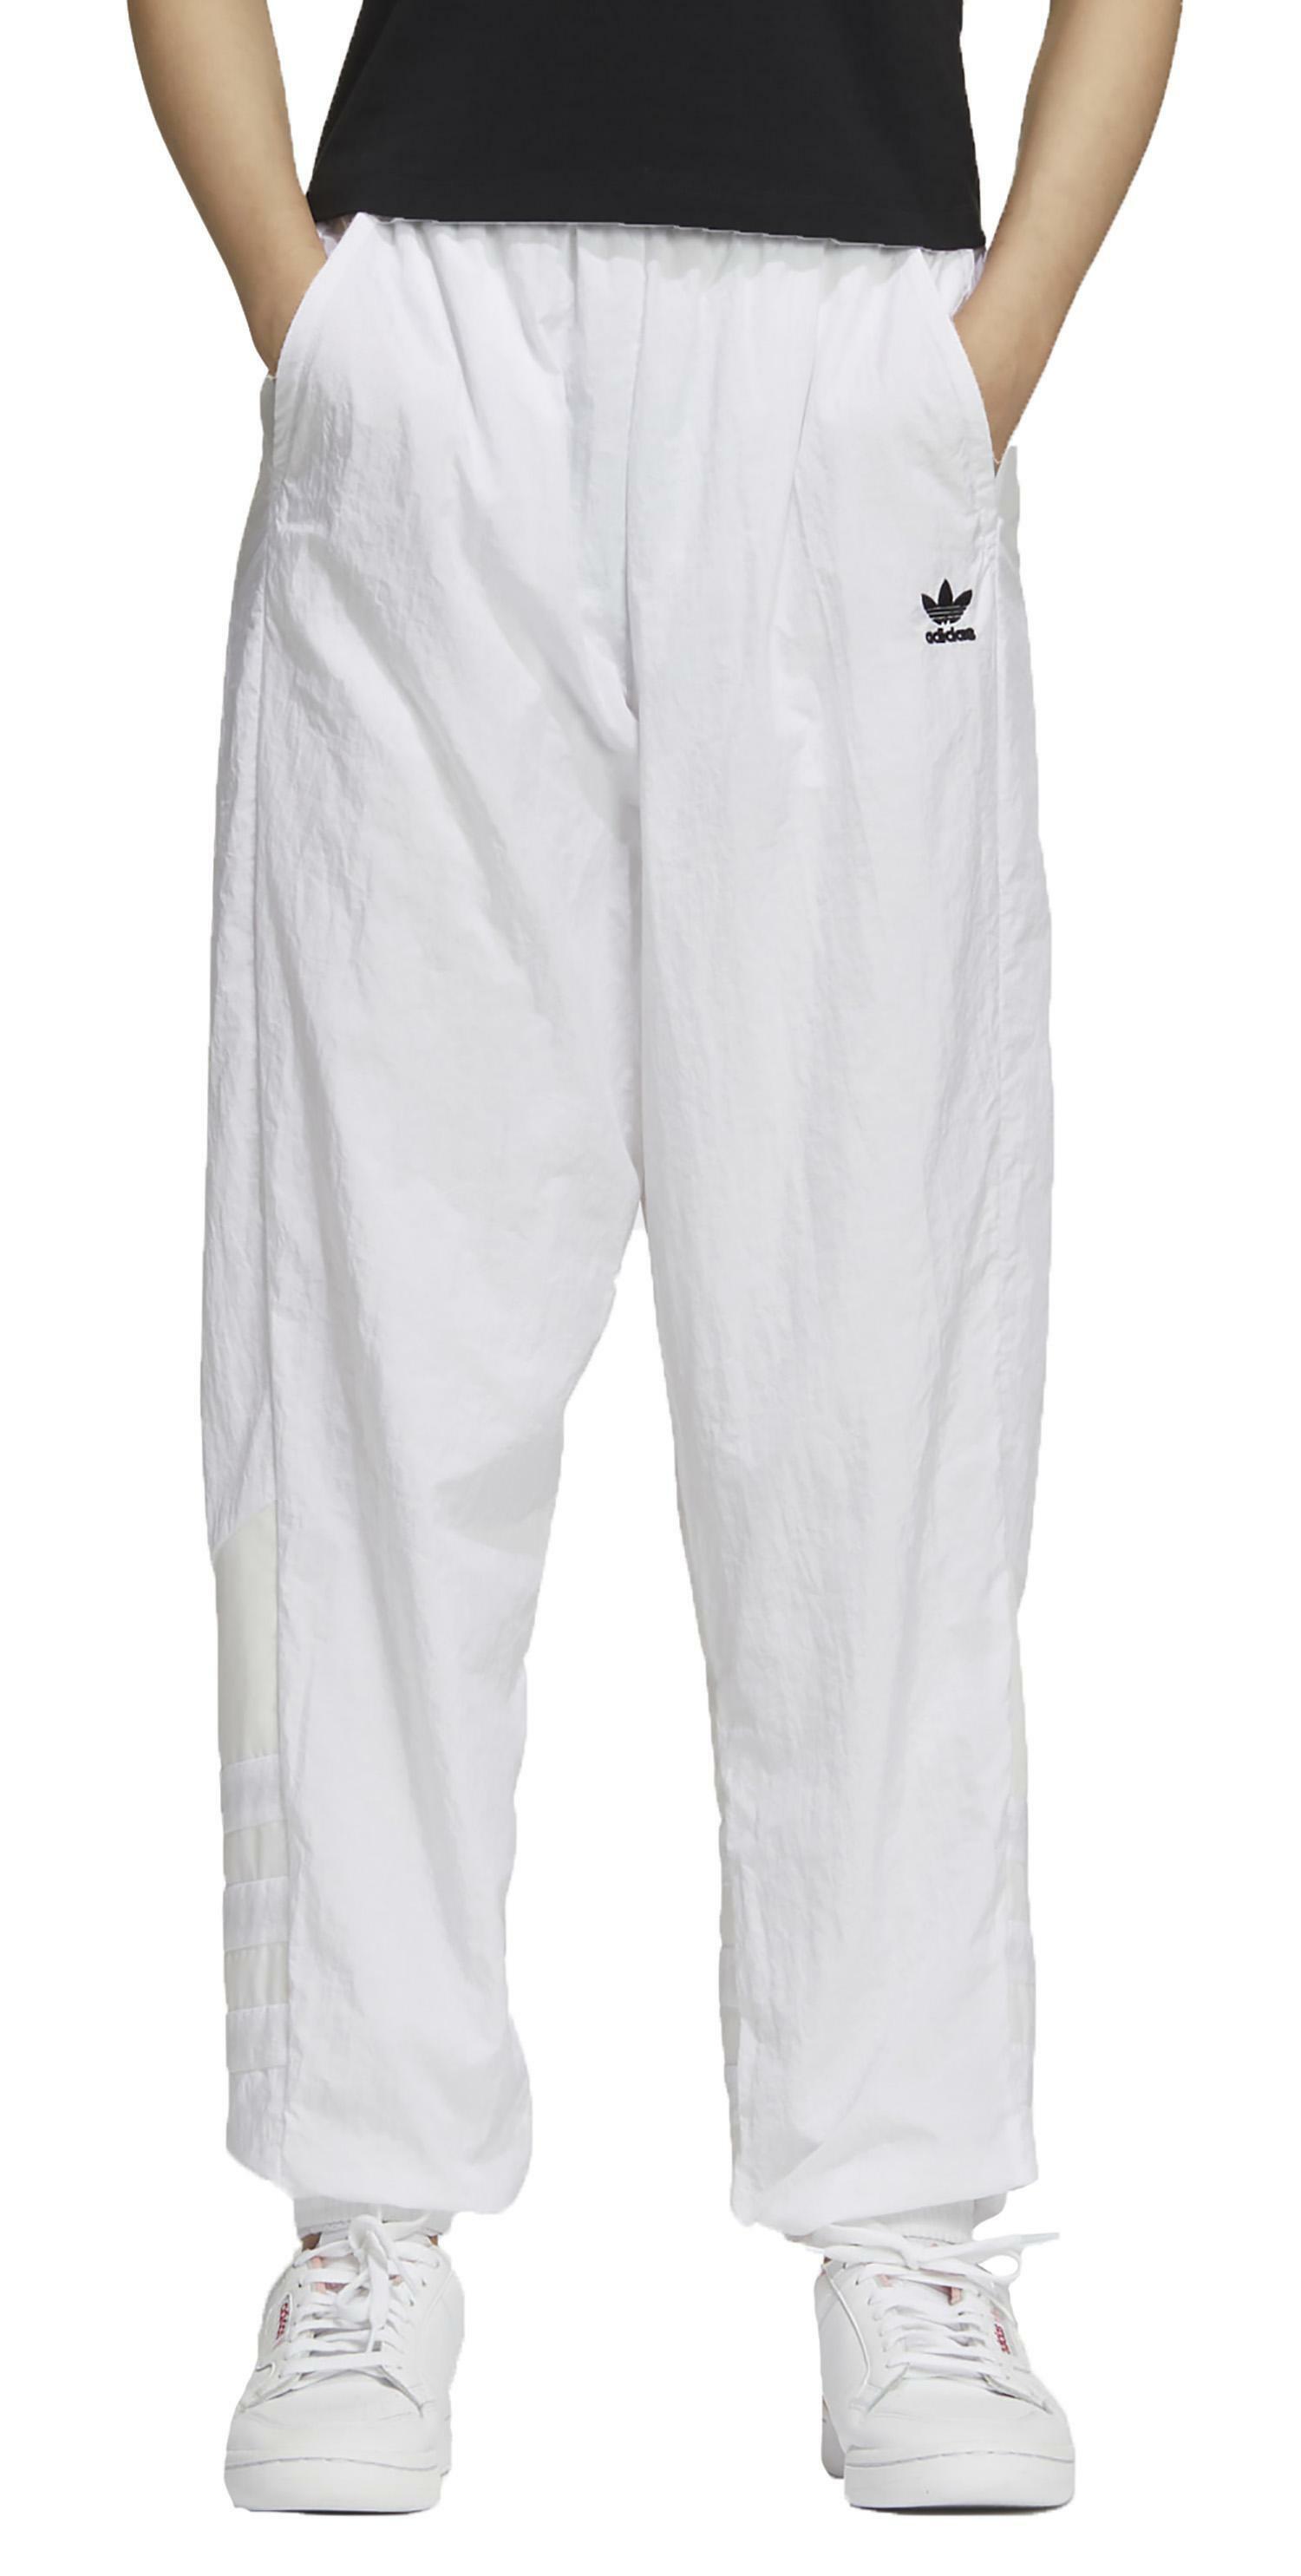 Adidas lrg logo tp pantaloni donna bianchi fm2586